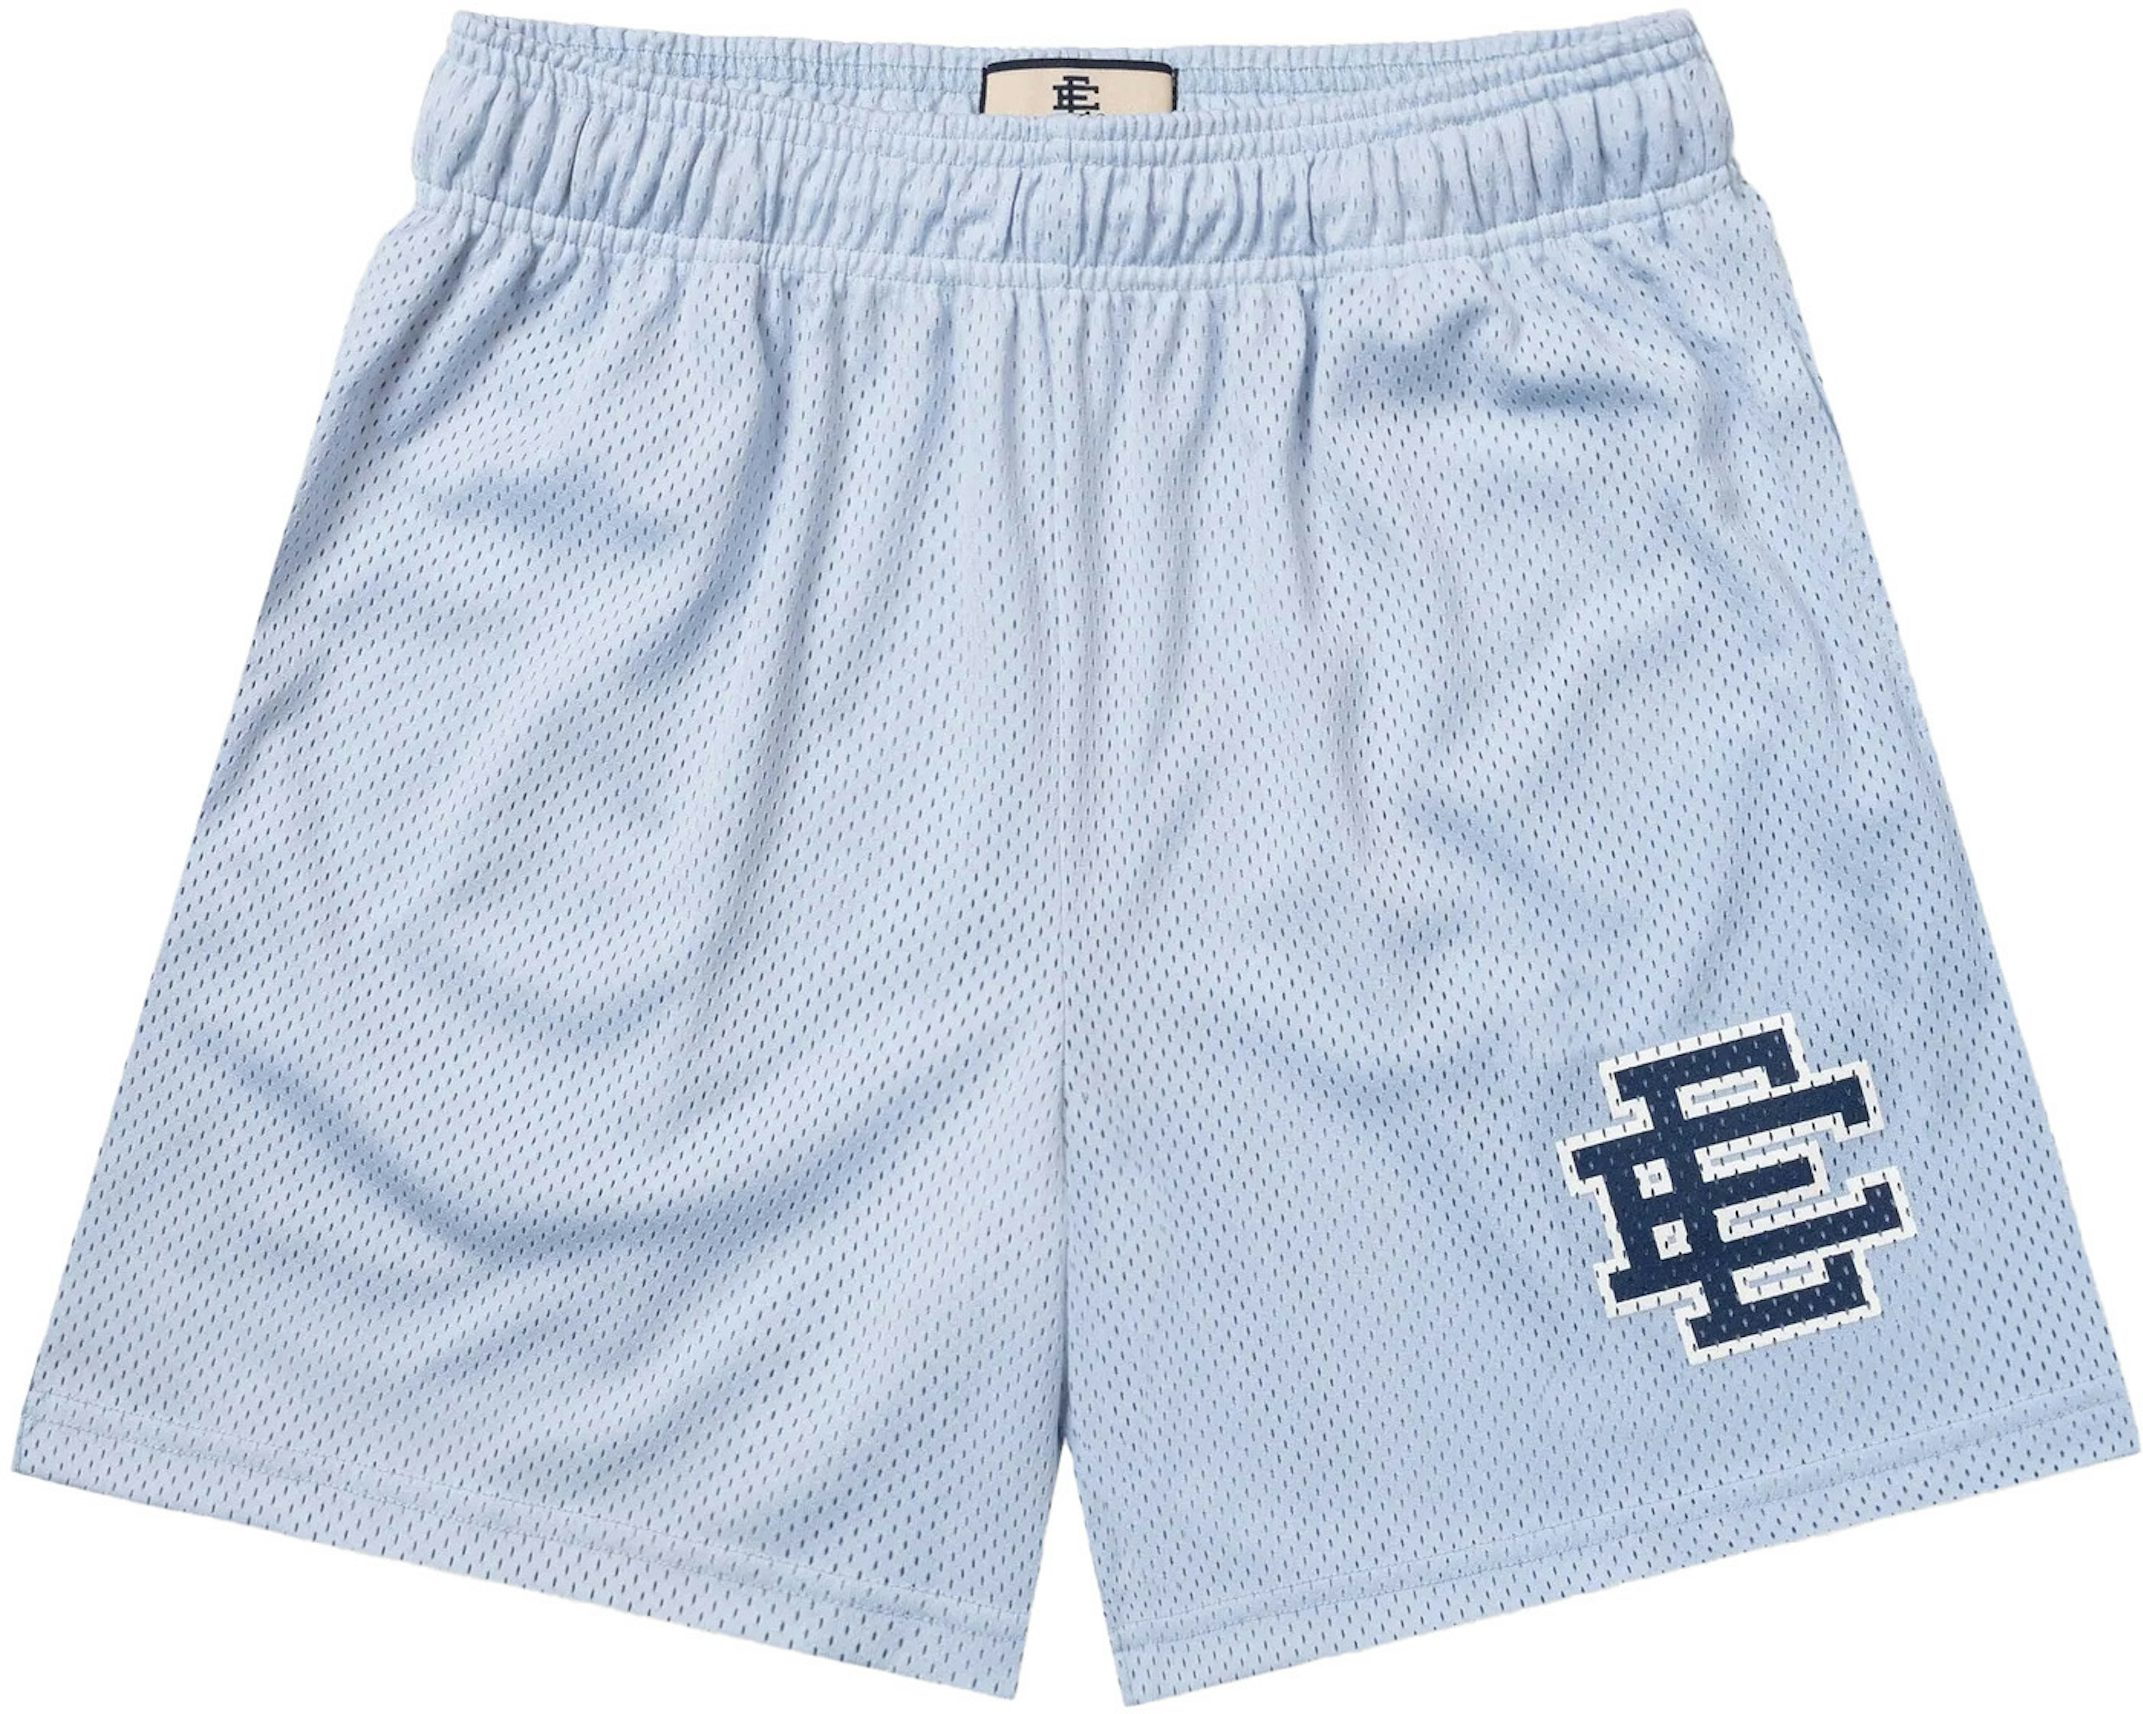 Eric Emanuel, Shorts, Eric Emanuel Mens Size Small Blue Unc North  Carolina White Streetwear Short